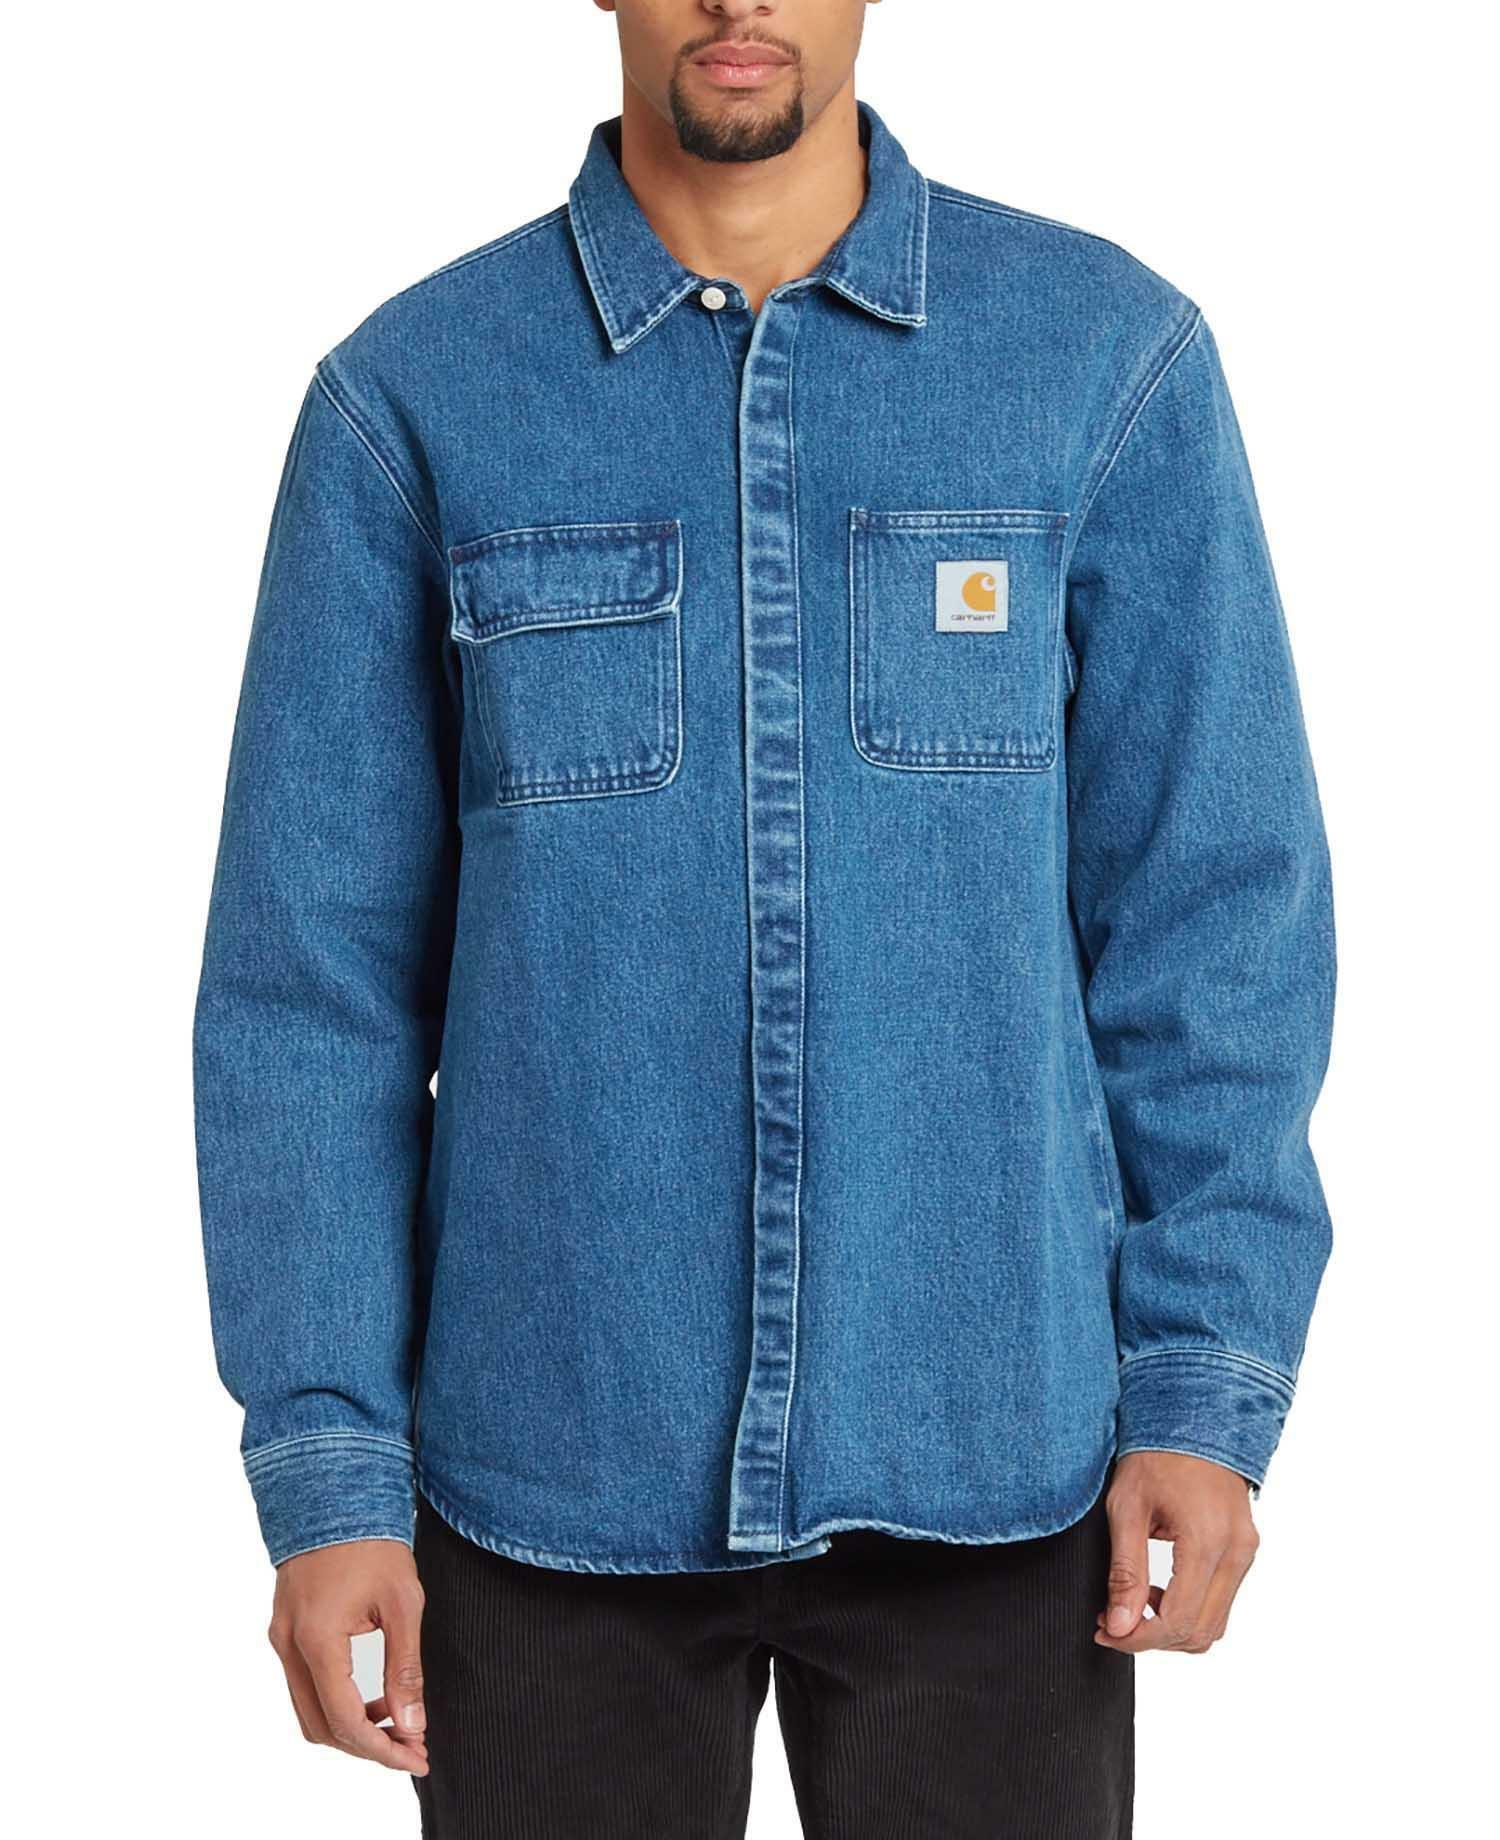 Carhartt camicia di jeans uomo i023977blstn